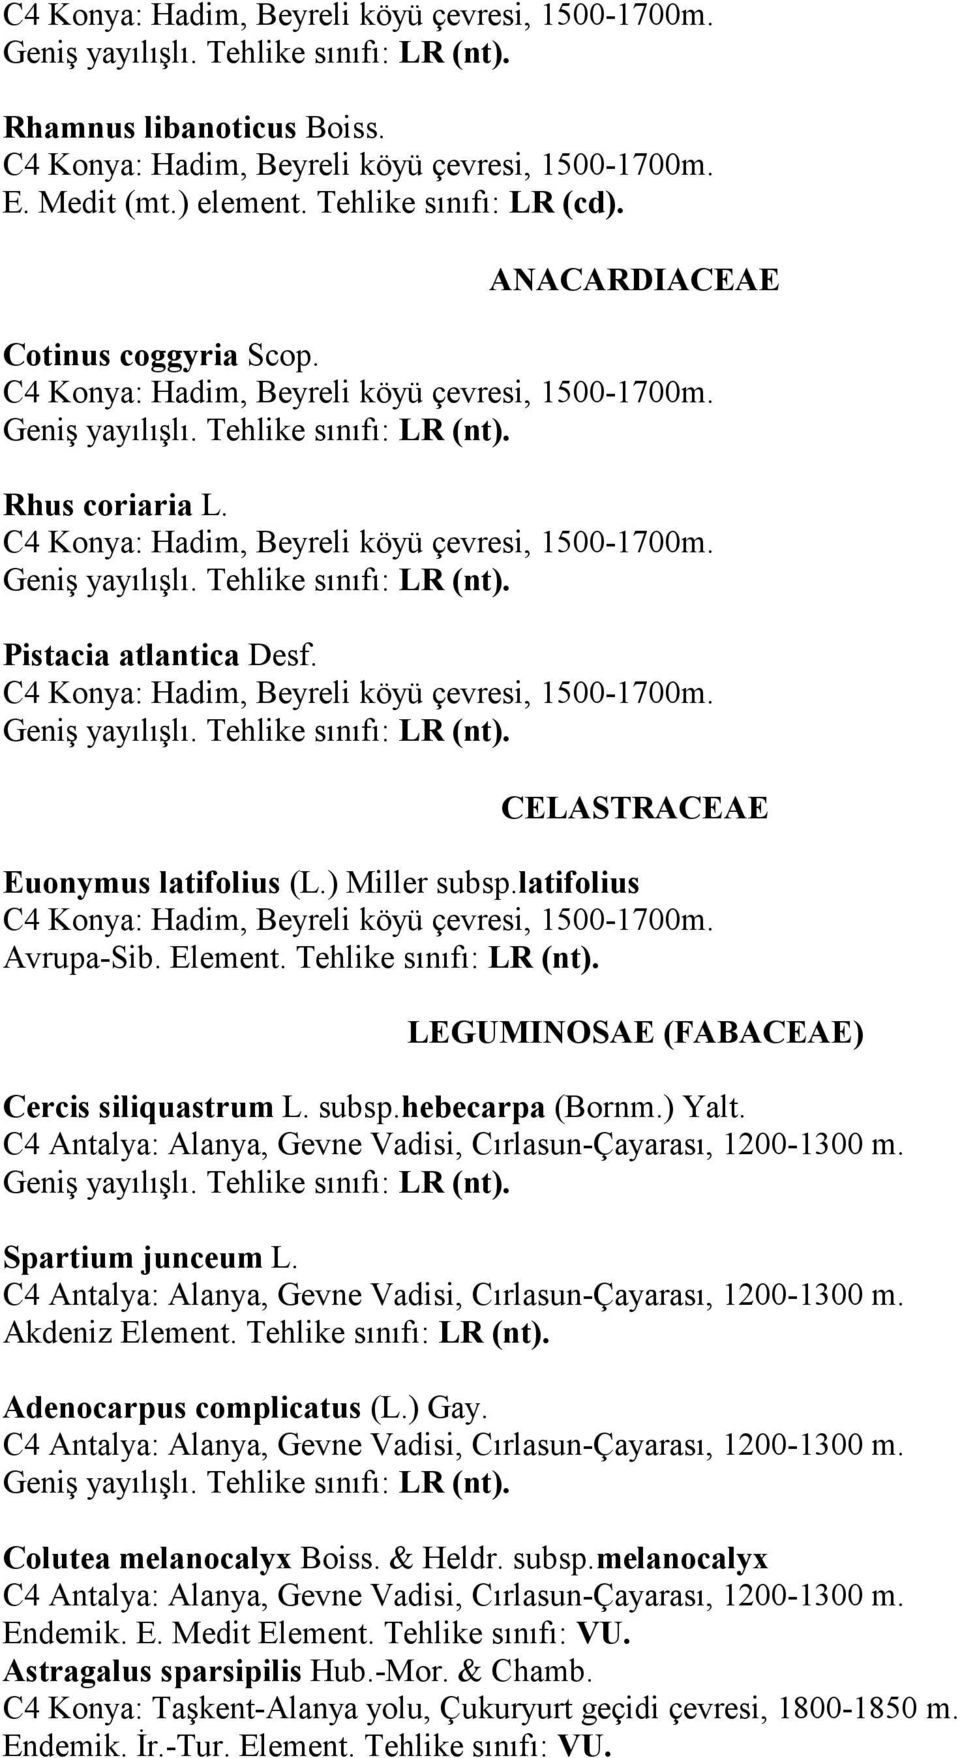 C4 Antalya: Alanya, Gevne Vadisi, Crlasun-Çayaras, 1200-1300 m. Spartium junceum L. C4 Antalya: Alanya, Gevne Vadisi, Crlasun-Çayaras, 1200-1300 m. Akdeniz Element. Tehlike snf: LR (nt).